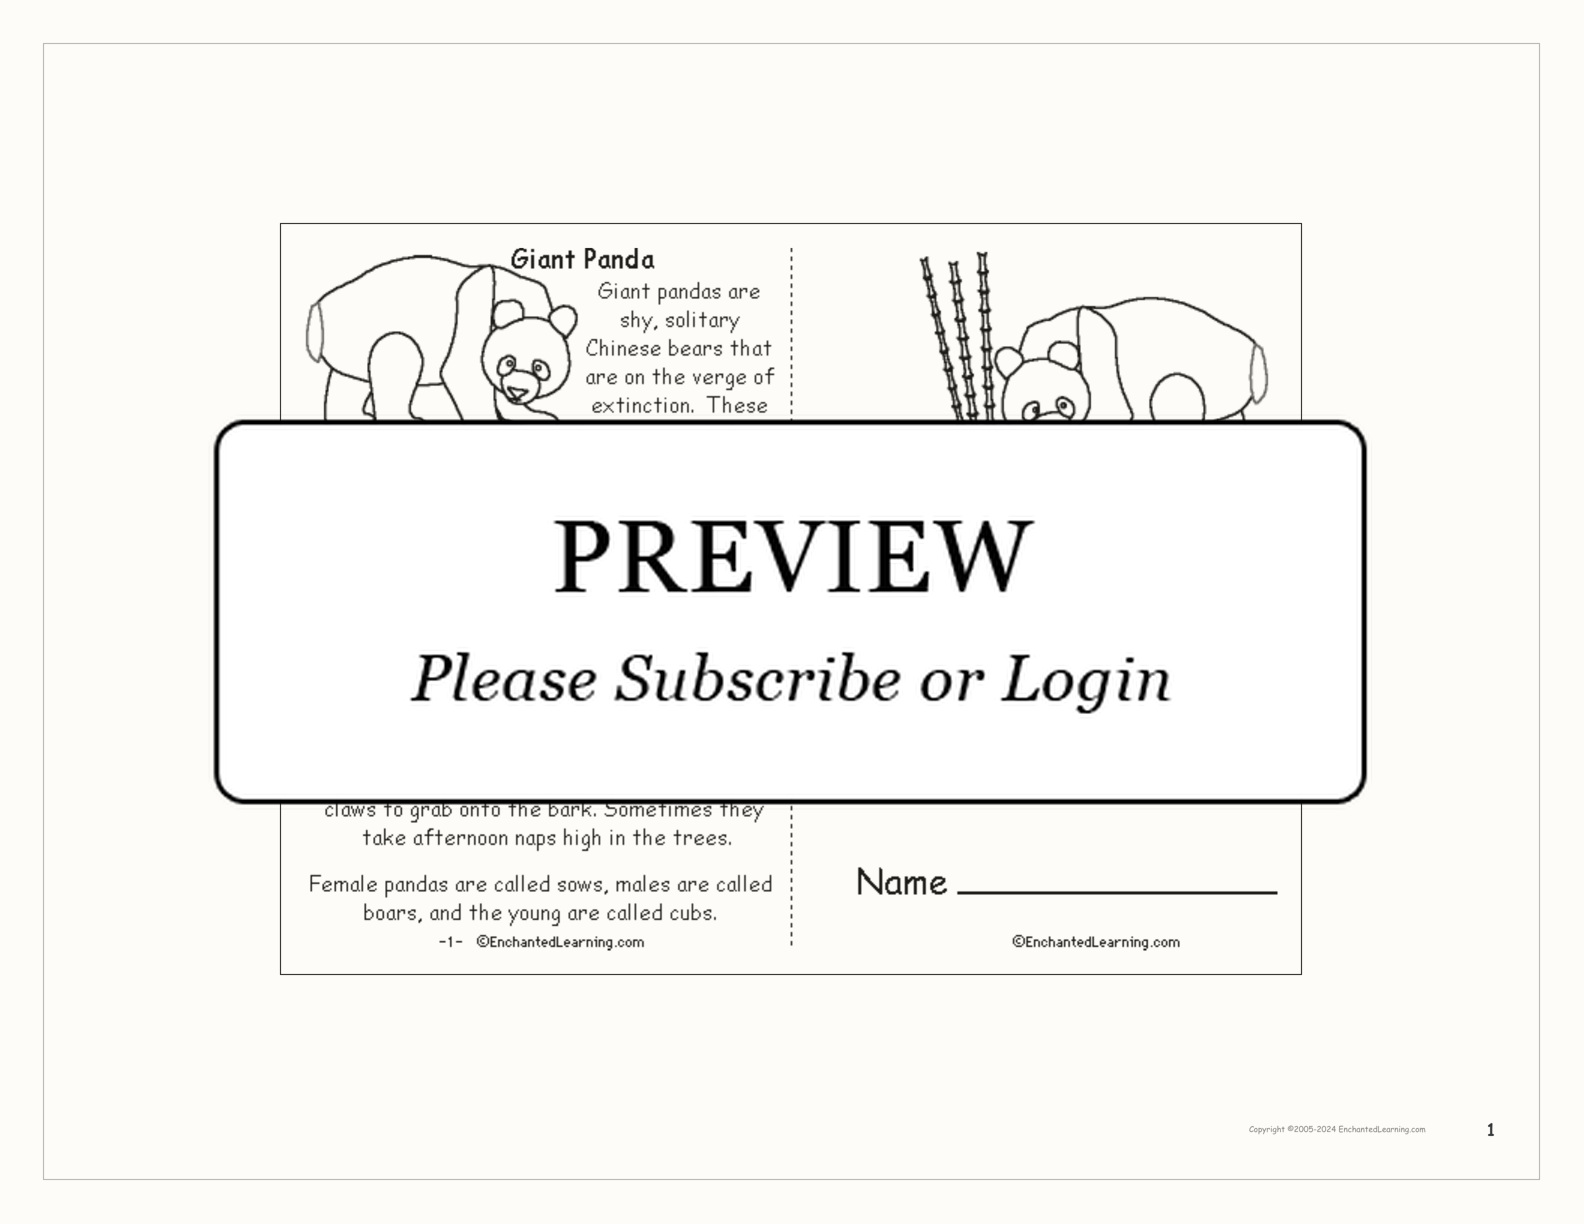 Giant Panda Book interactive printout page 1